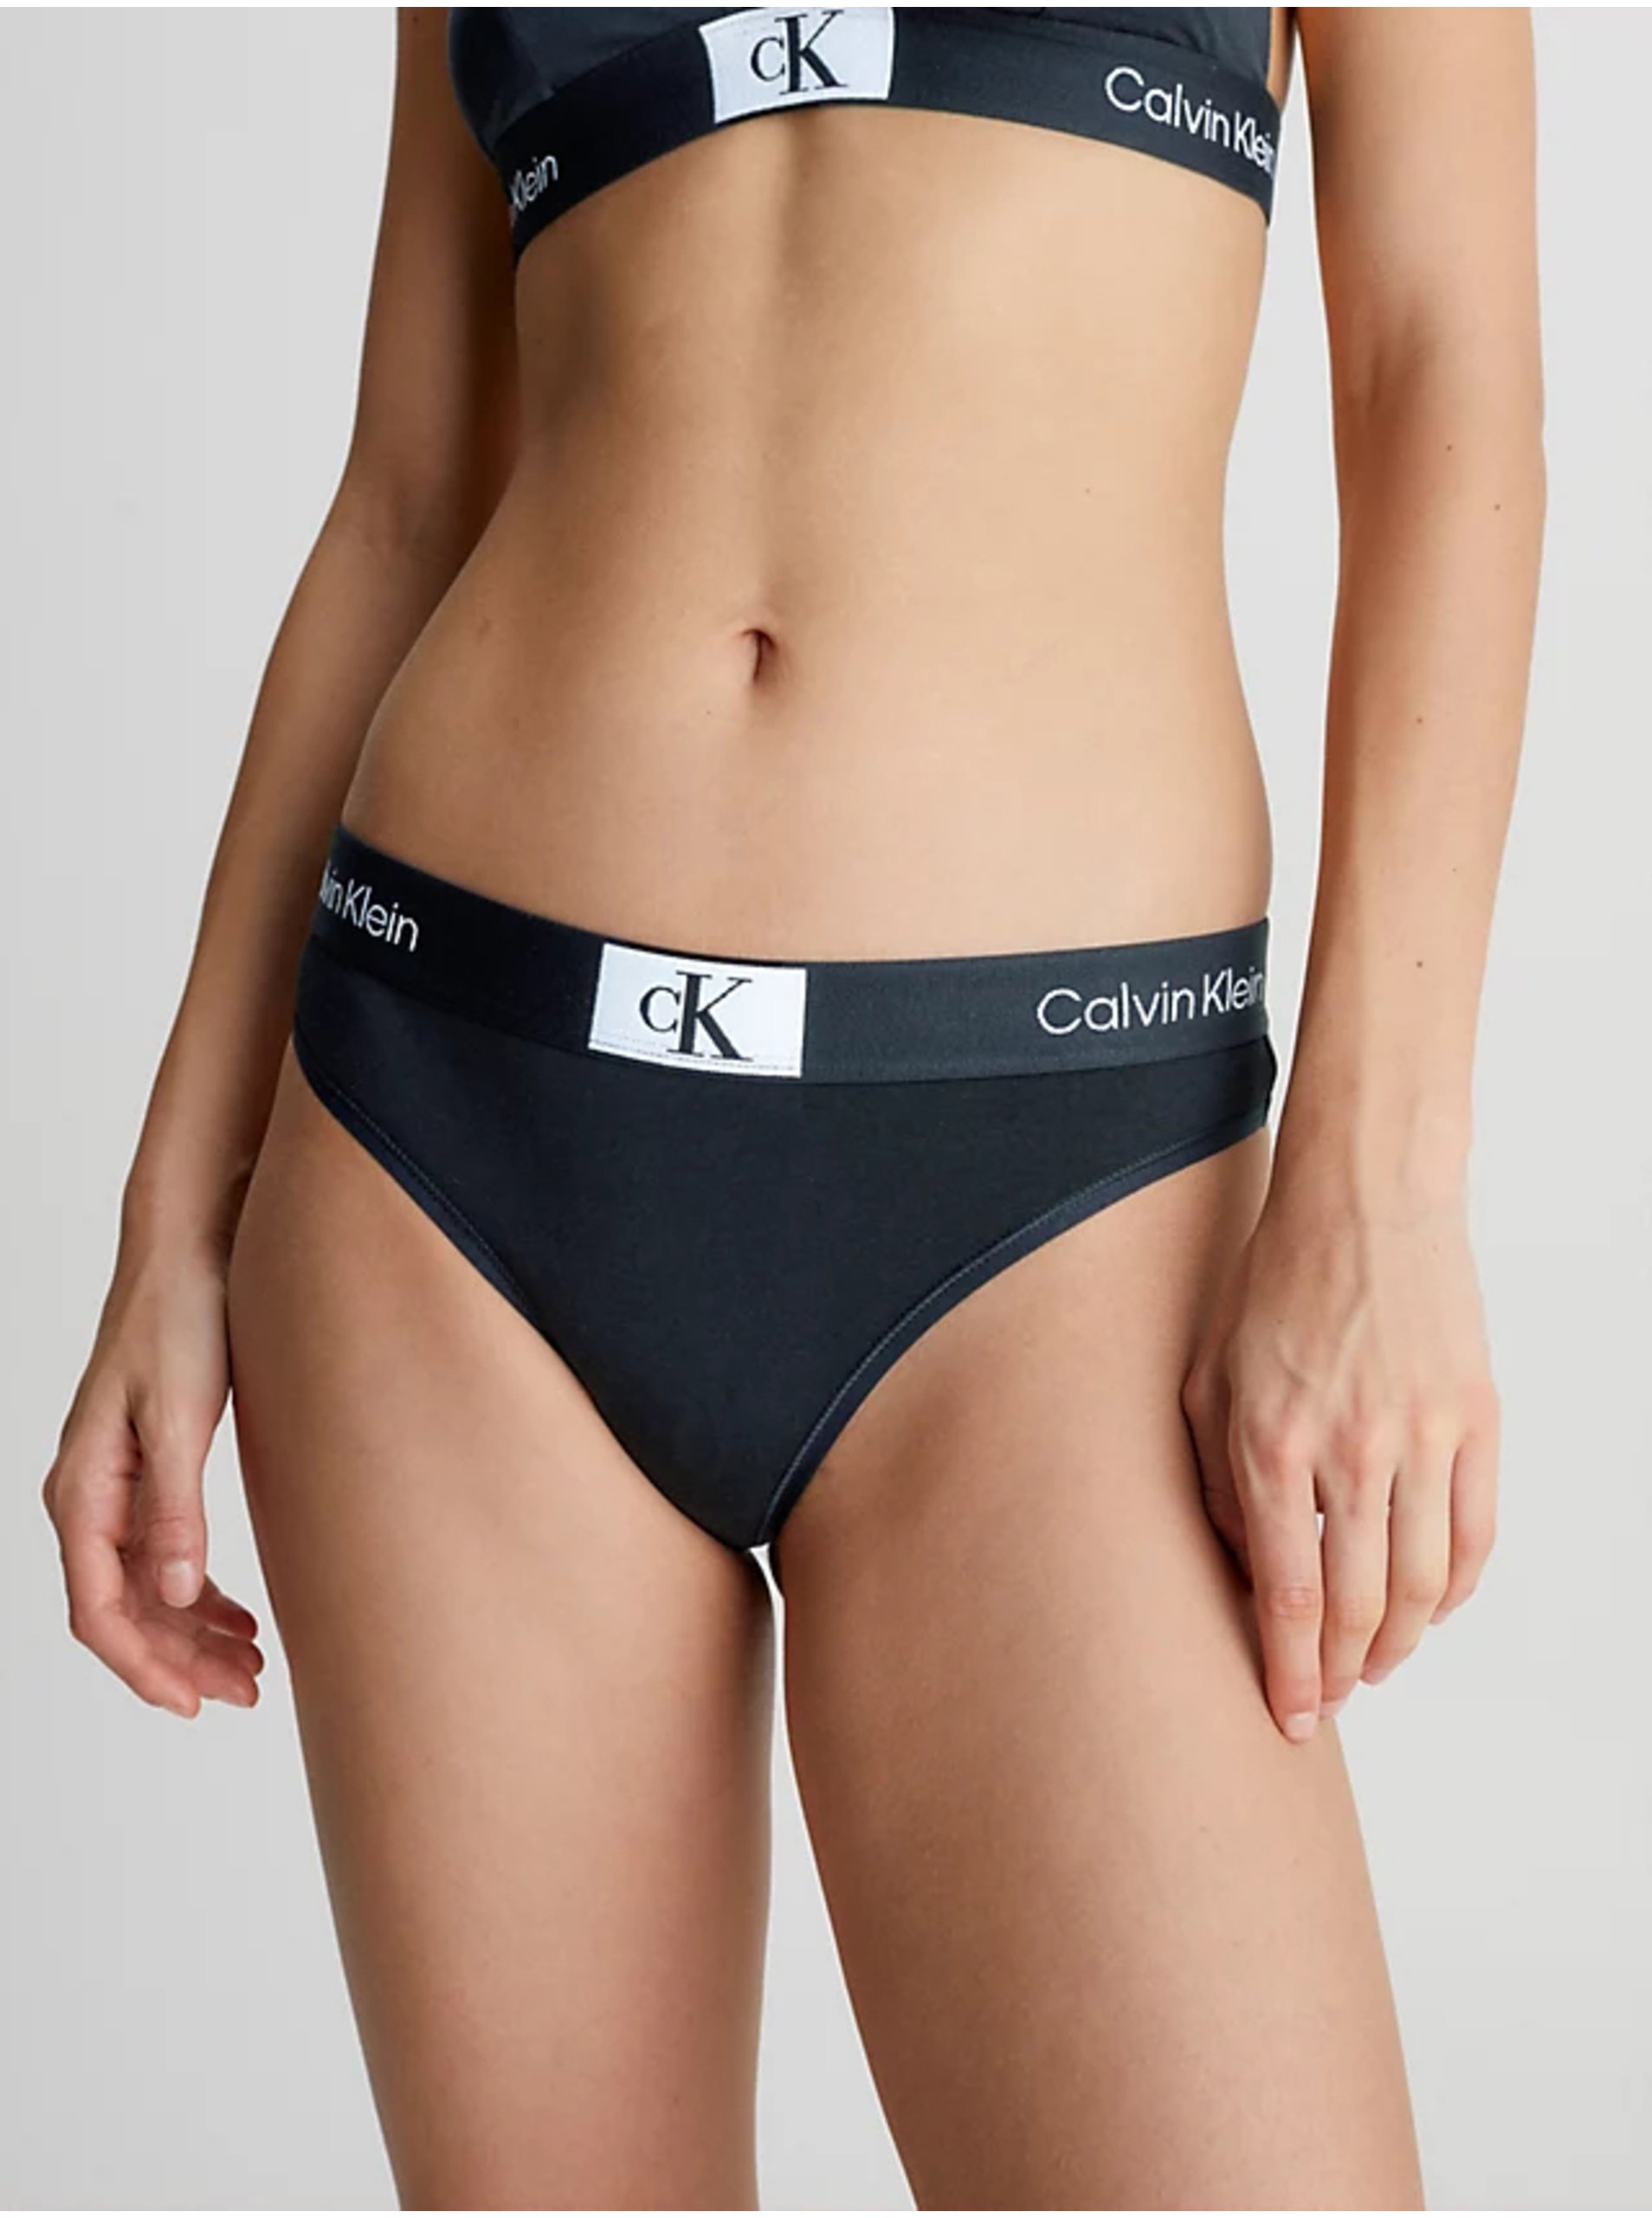 Lacno Čierne dámske tangá Calvin Klein Underwear